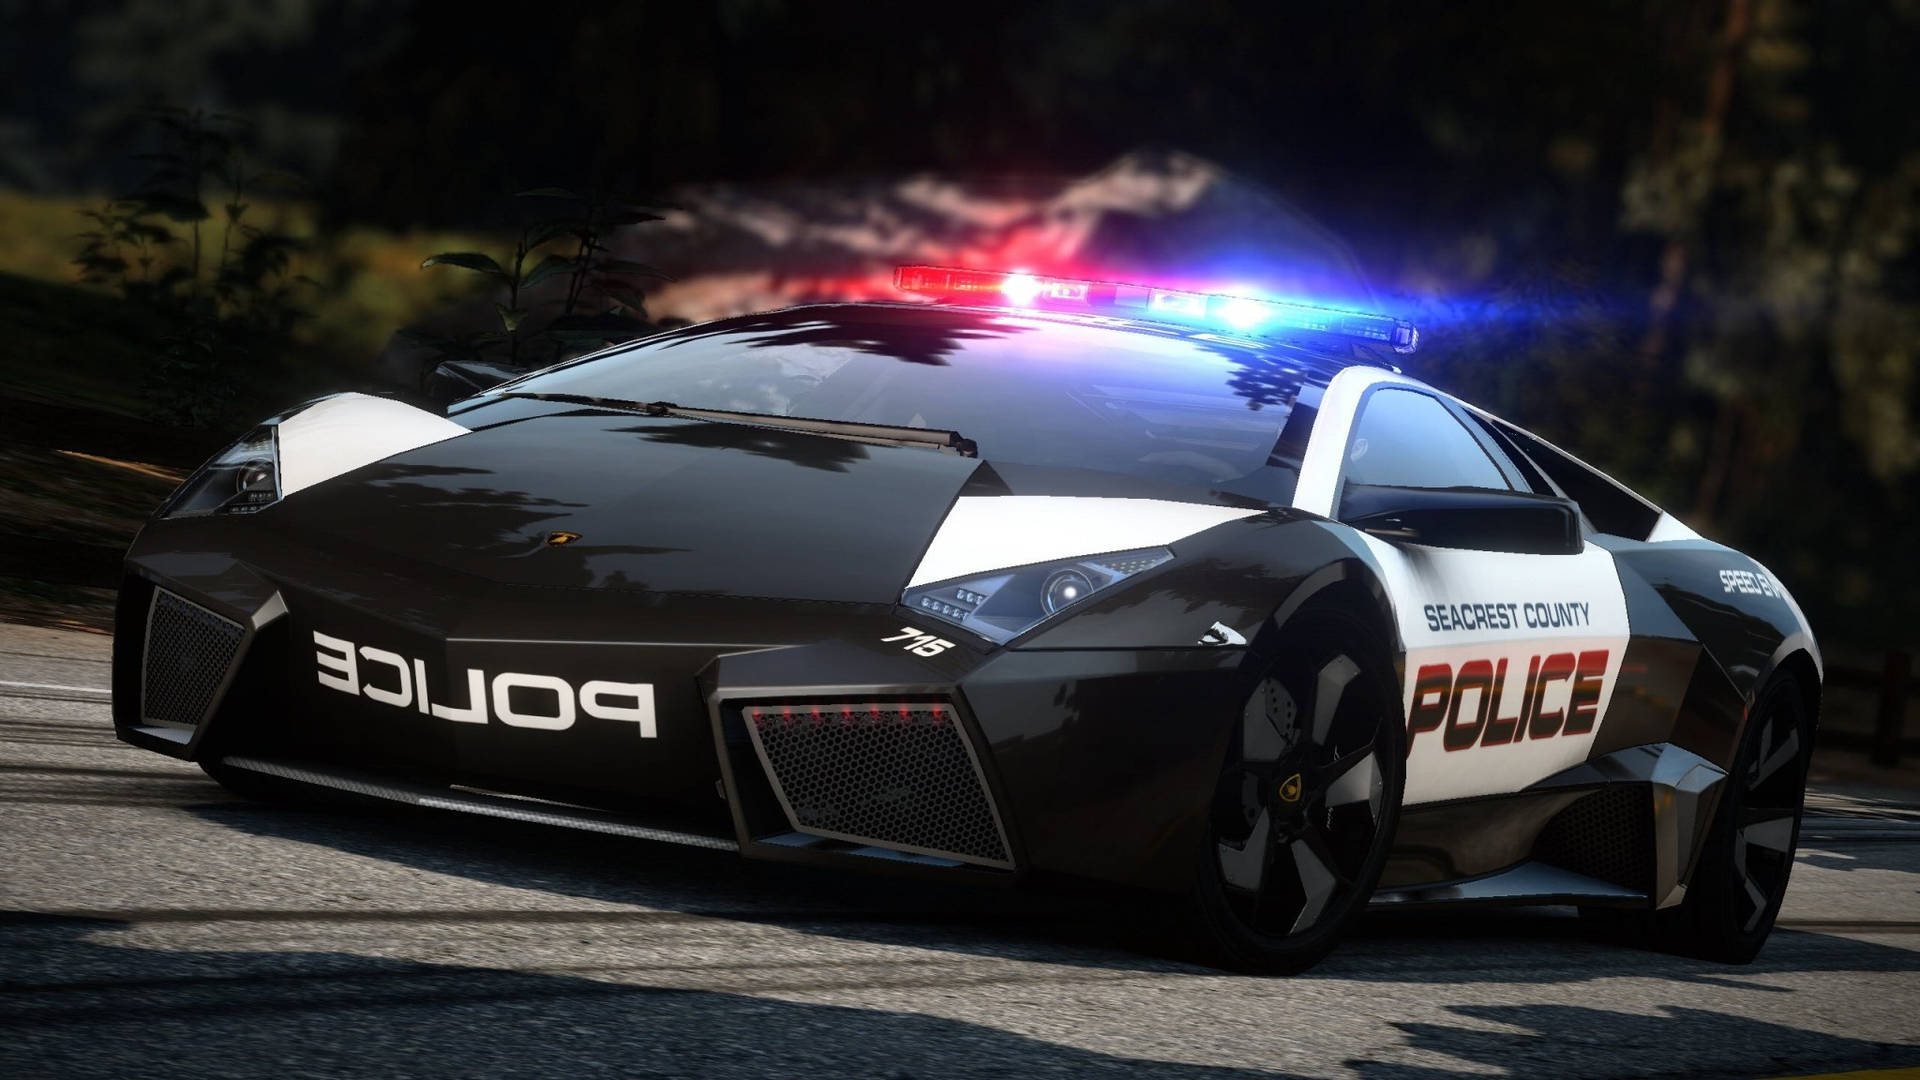 Need For Speed Police Lamborghini Wallpaper